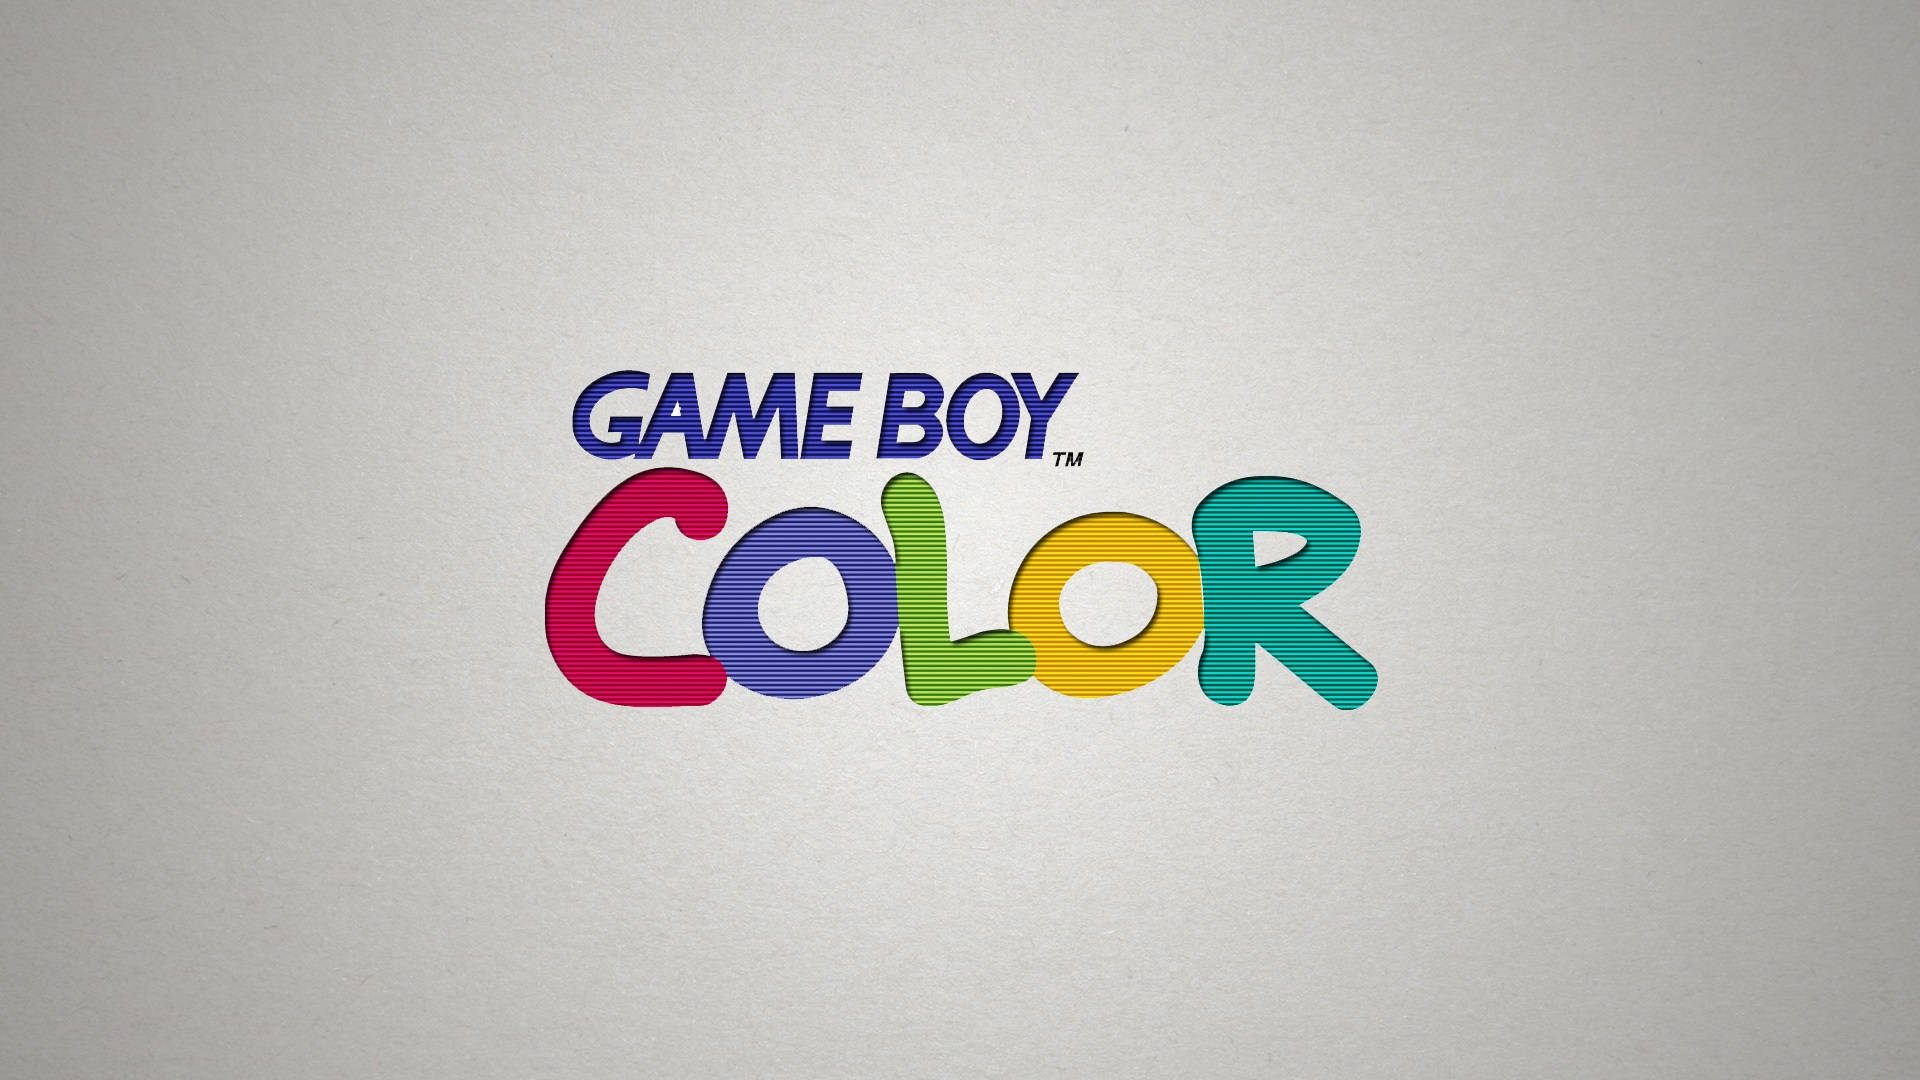 Gameboy Color-logotypen. Wallpaper